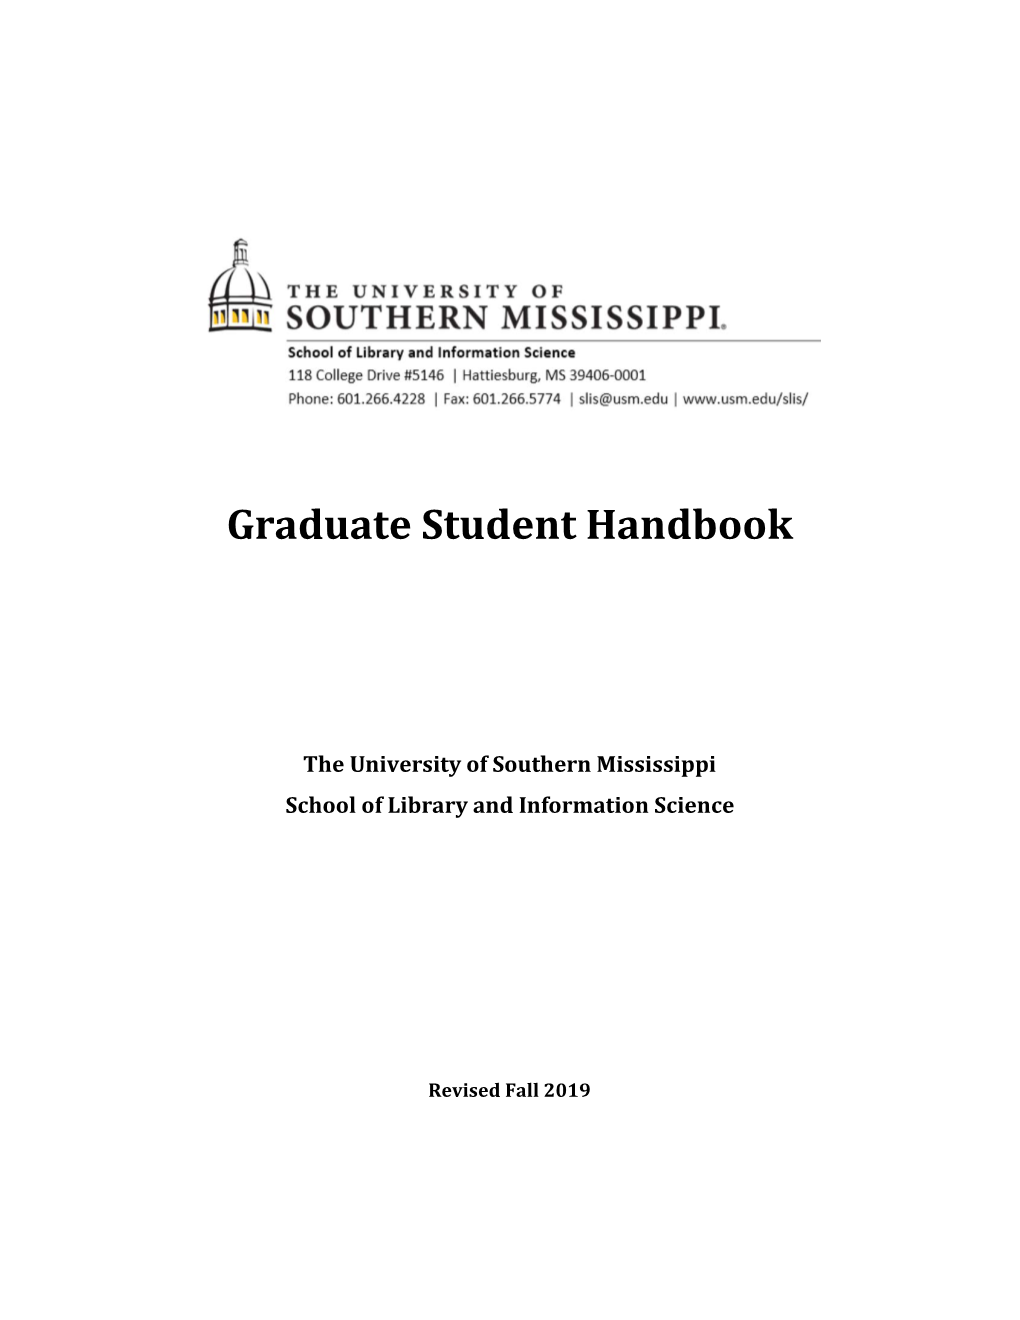 SLIS Graduate Student Handbook 2019-20